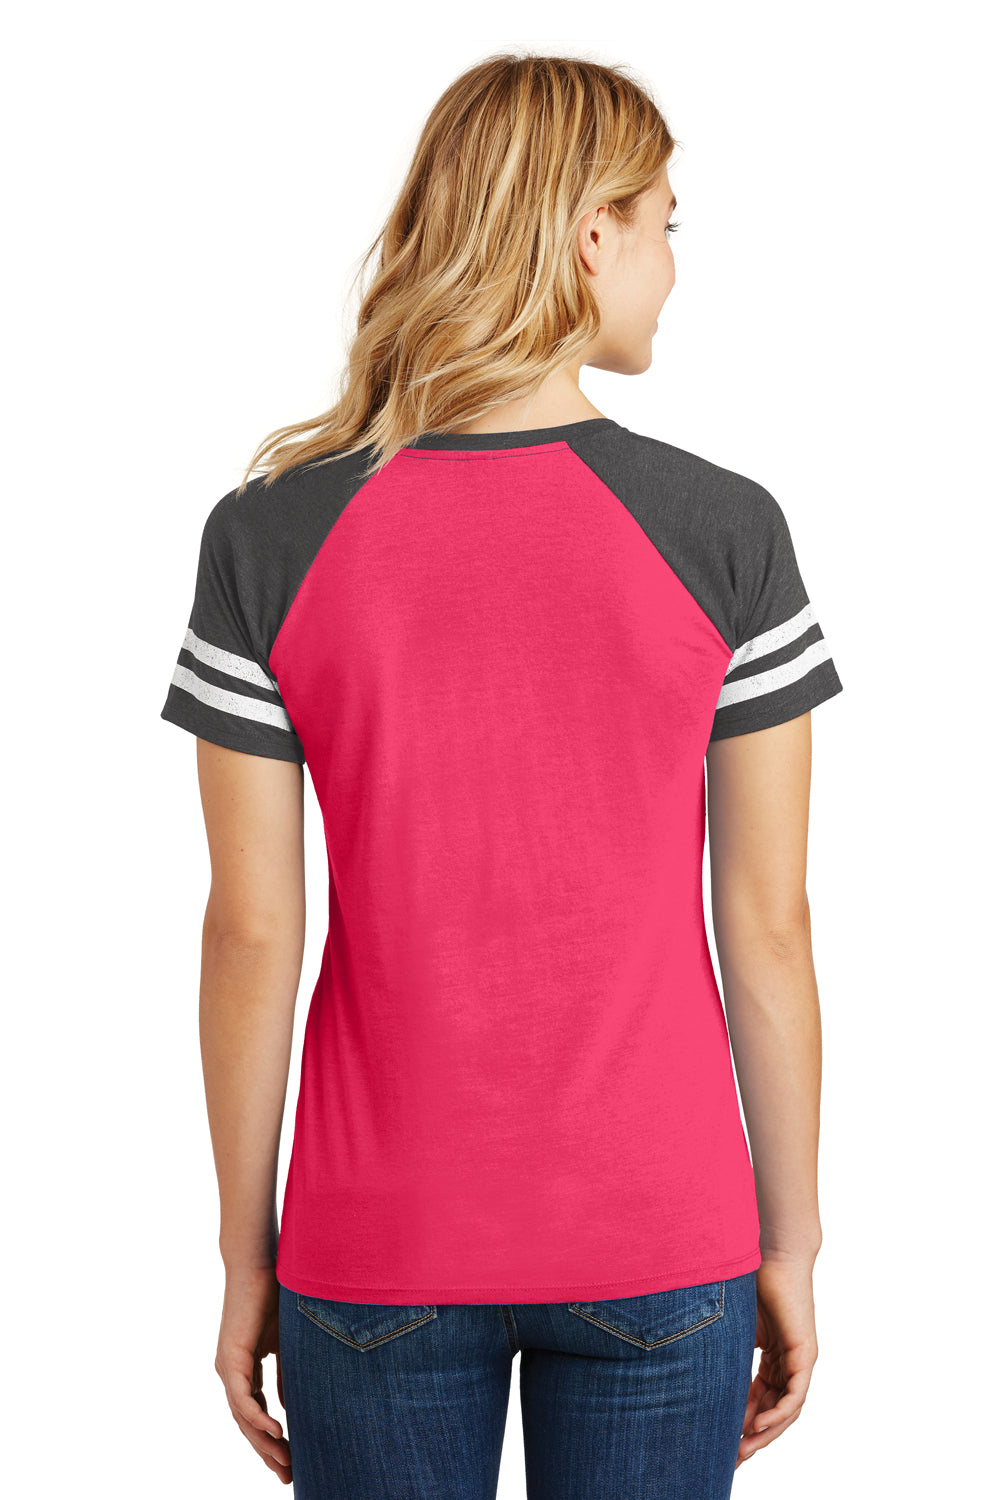 District DM476 Womens Game Short Sleeve V-Neck T-Shirt Heather Pink/Charcoal Grey Back